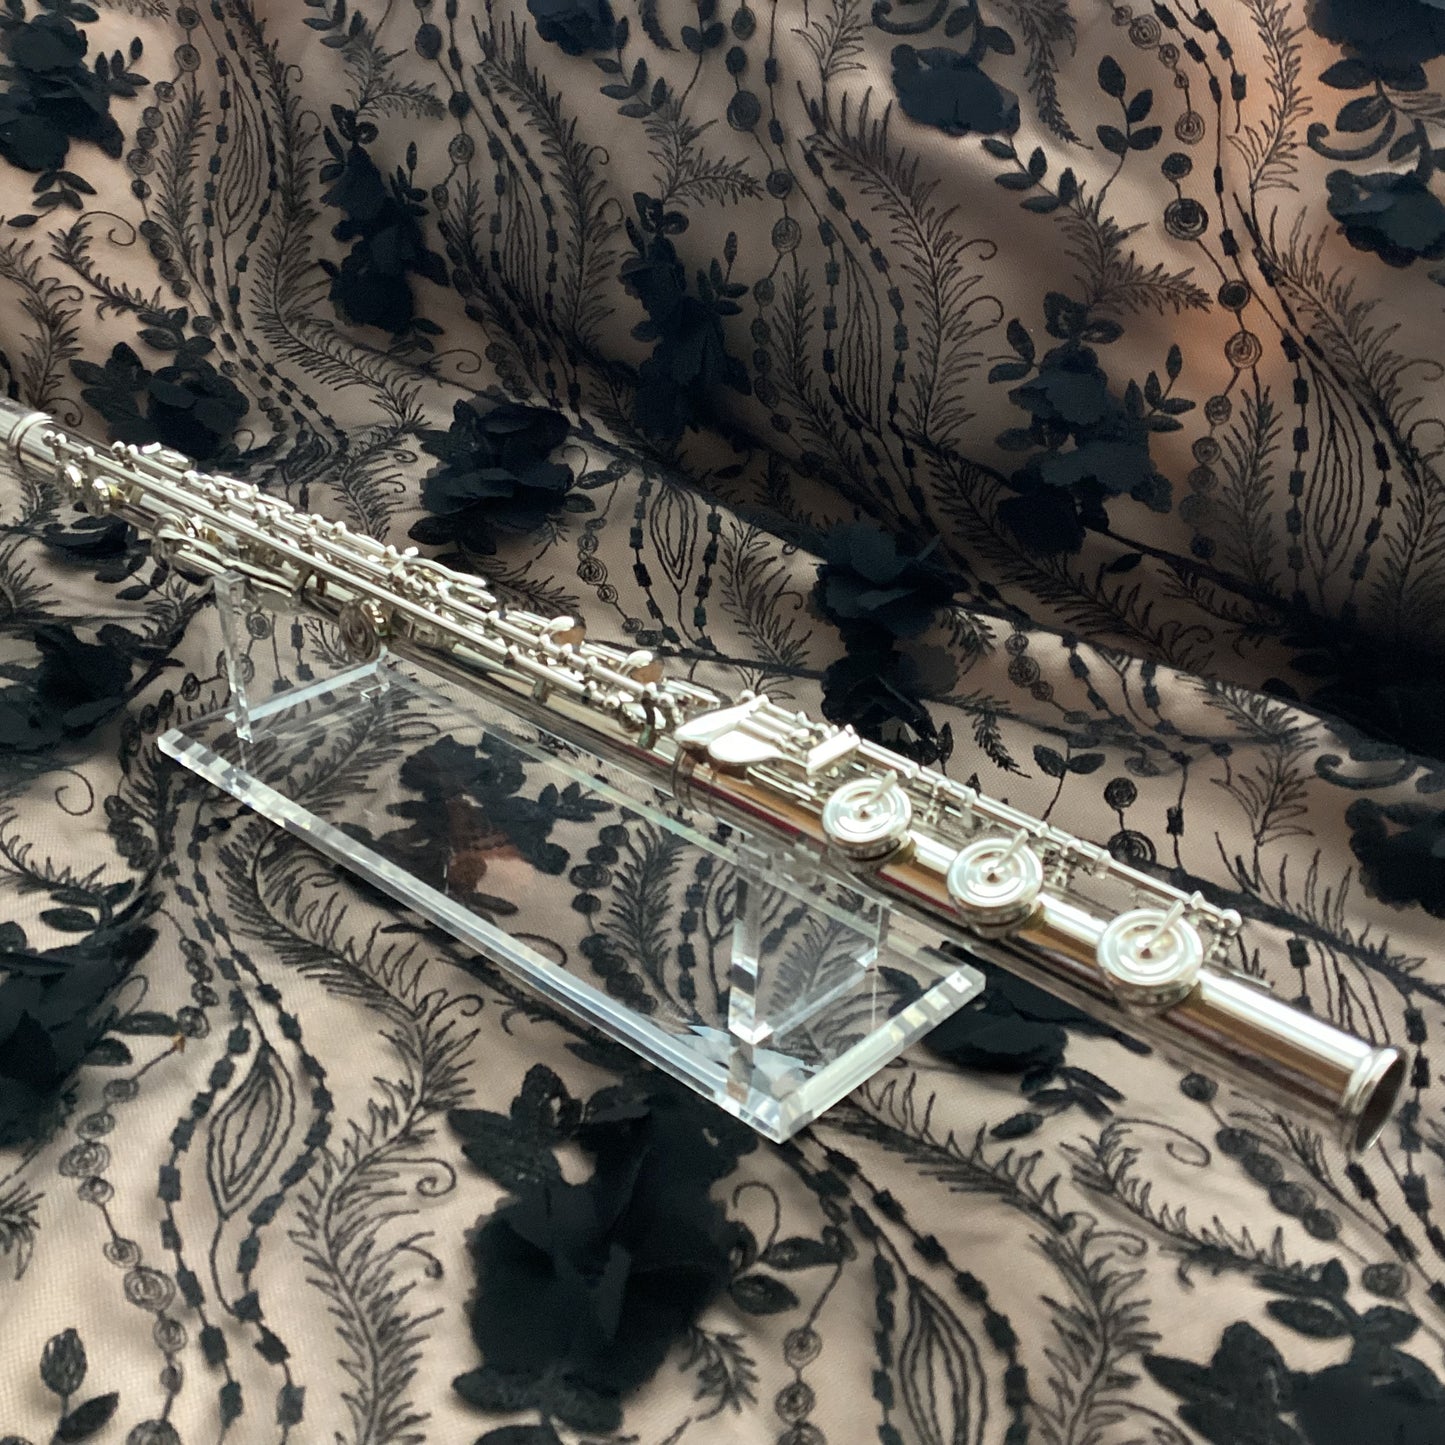 Altus 1107 Pre-Owned Flute